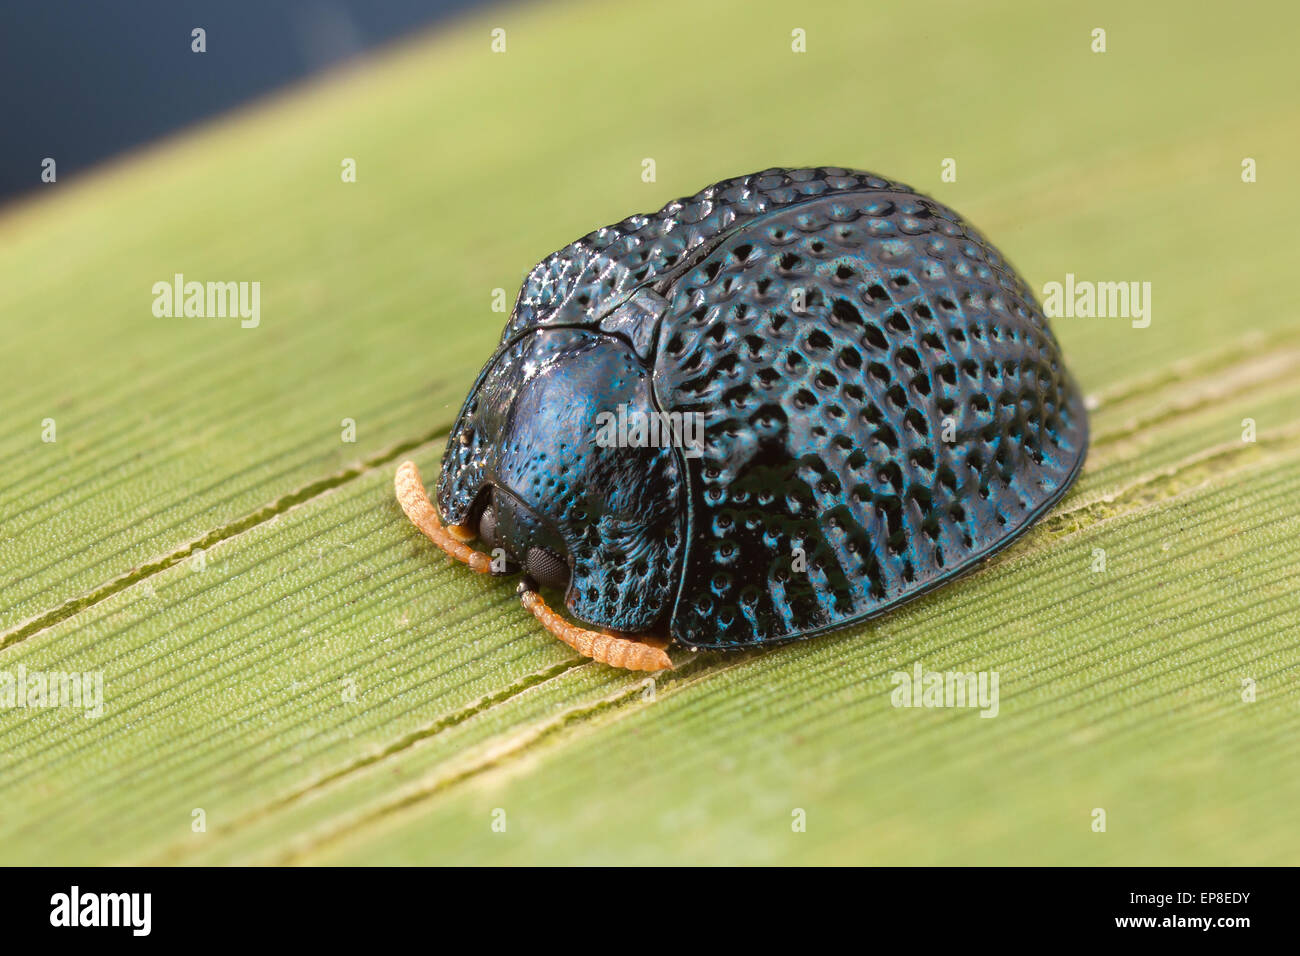 A Palmetto Tortoise Beetle (Hemisphaerota cyanea) perches on a Saw Palmetto leaf. Stock Photo